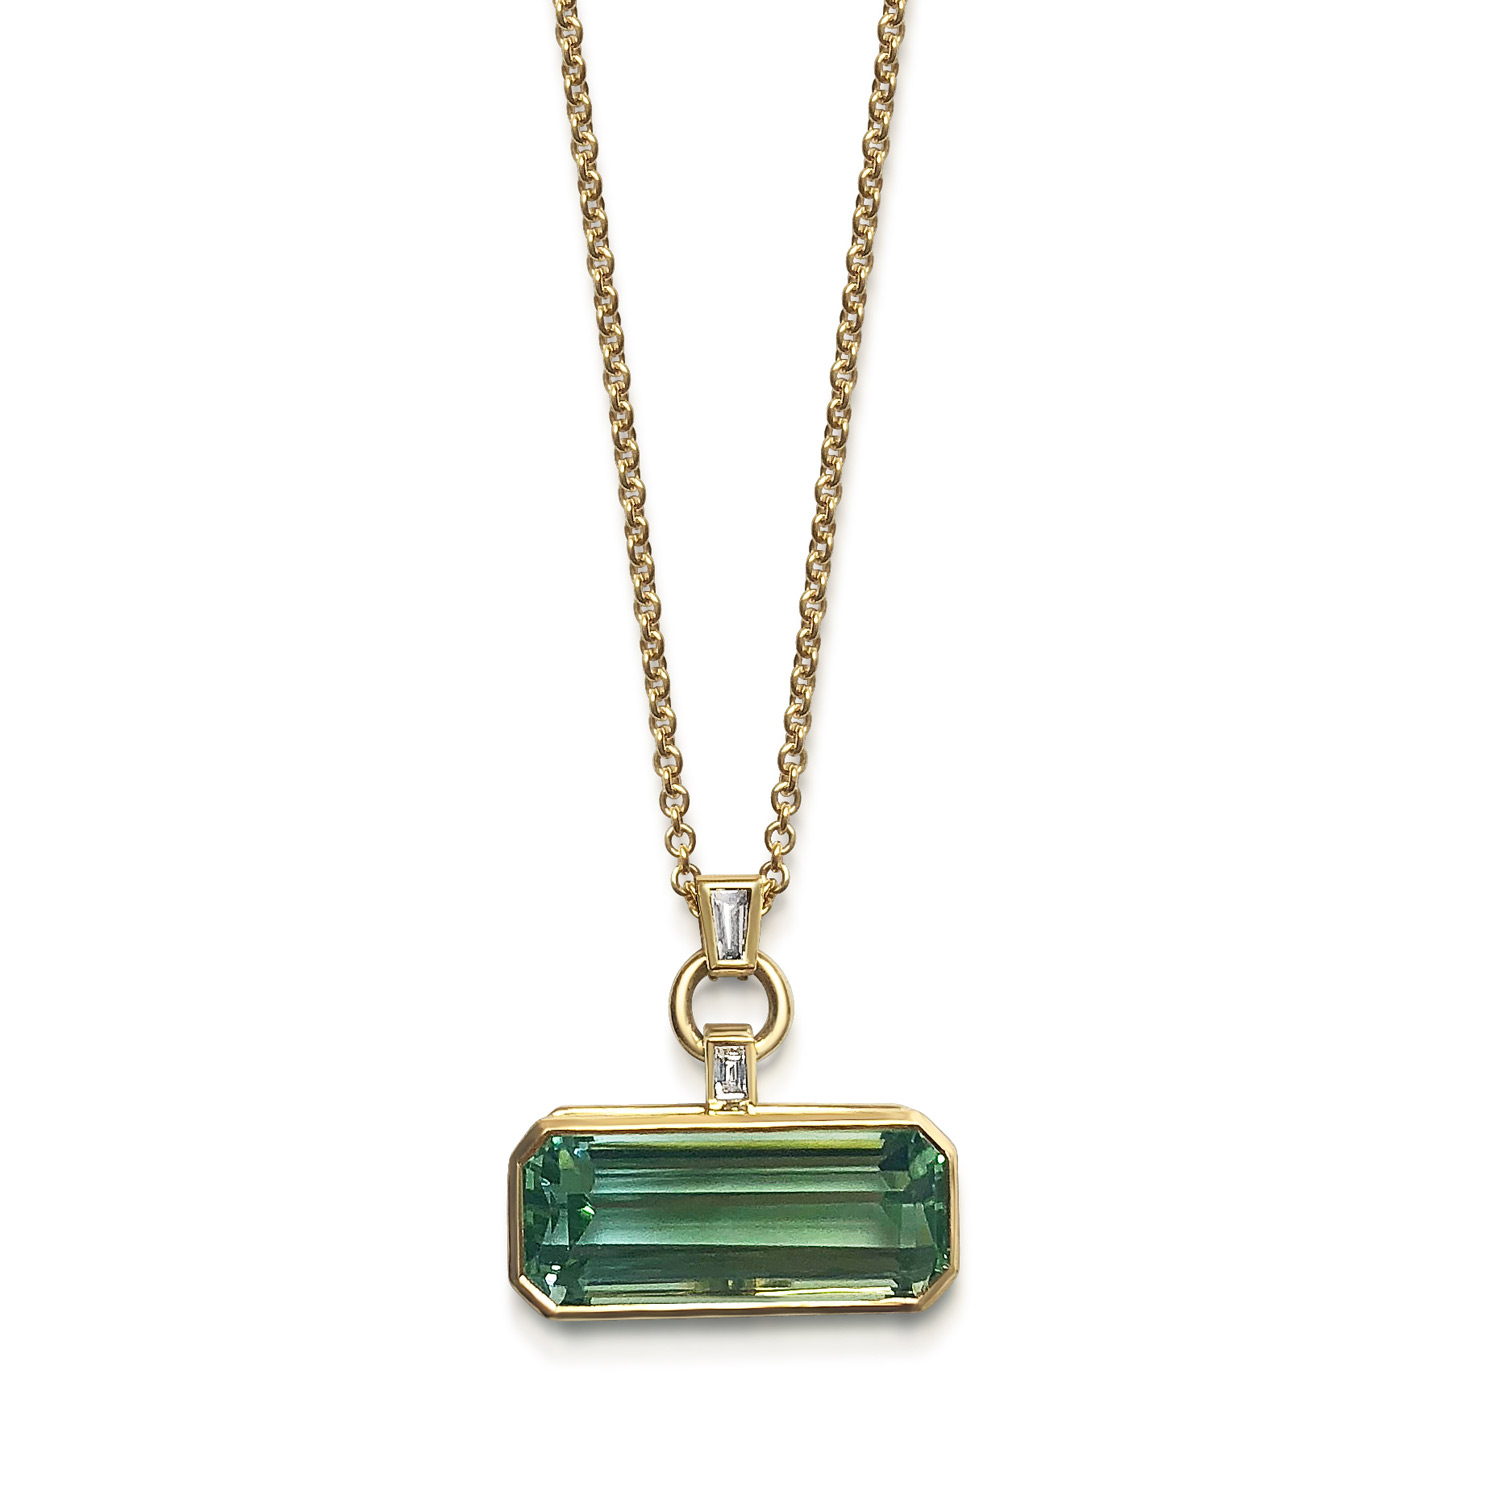 Bespoke rectangular-shaped octagonal two-coloured aquamarine and diamond pendant mounted in 18ct gold pendant.